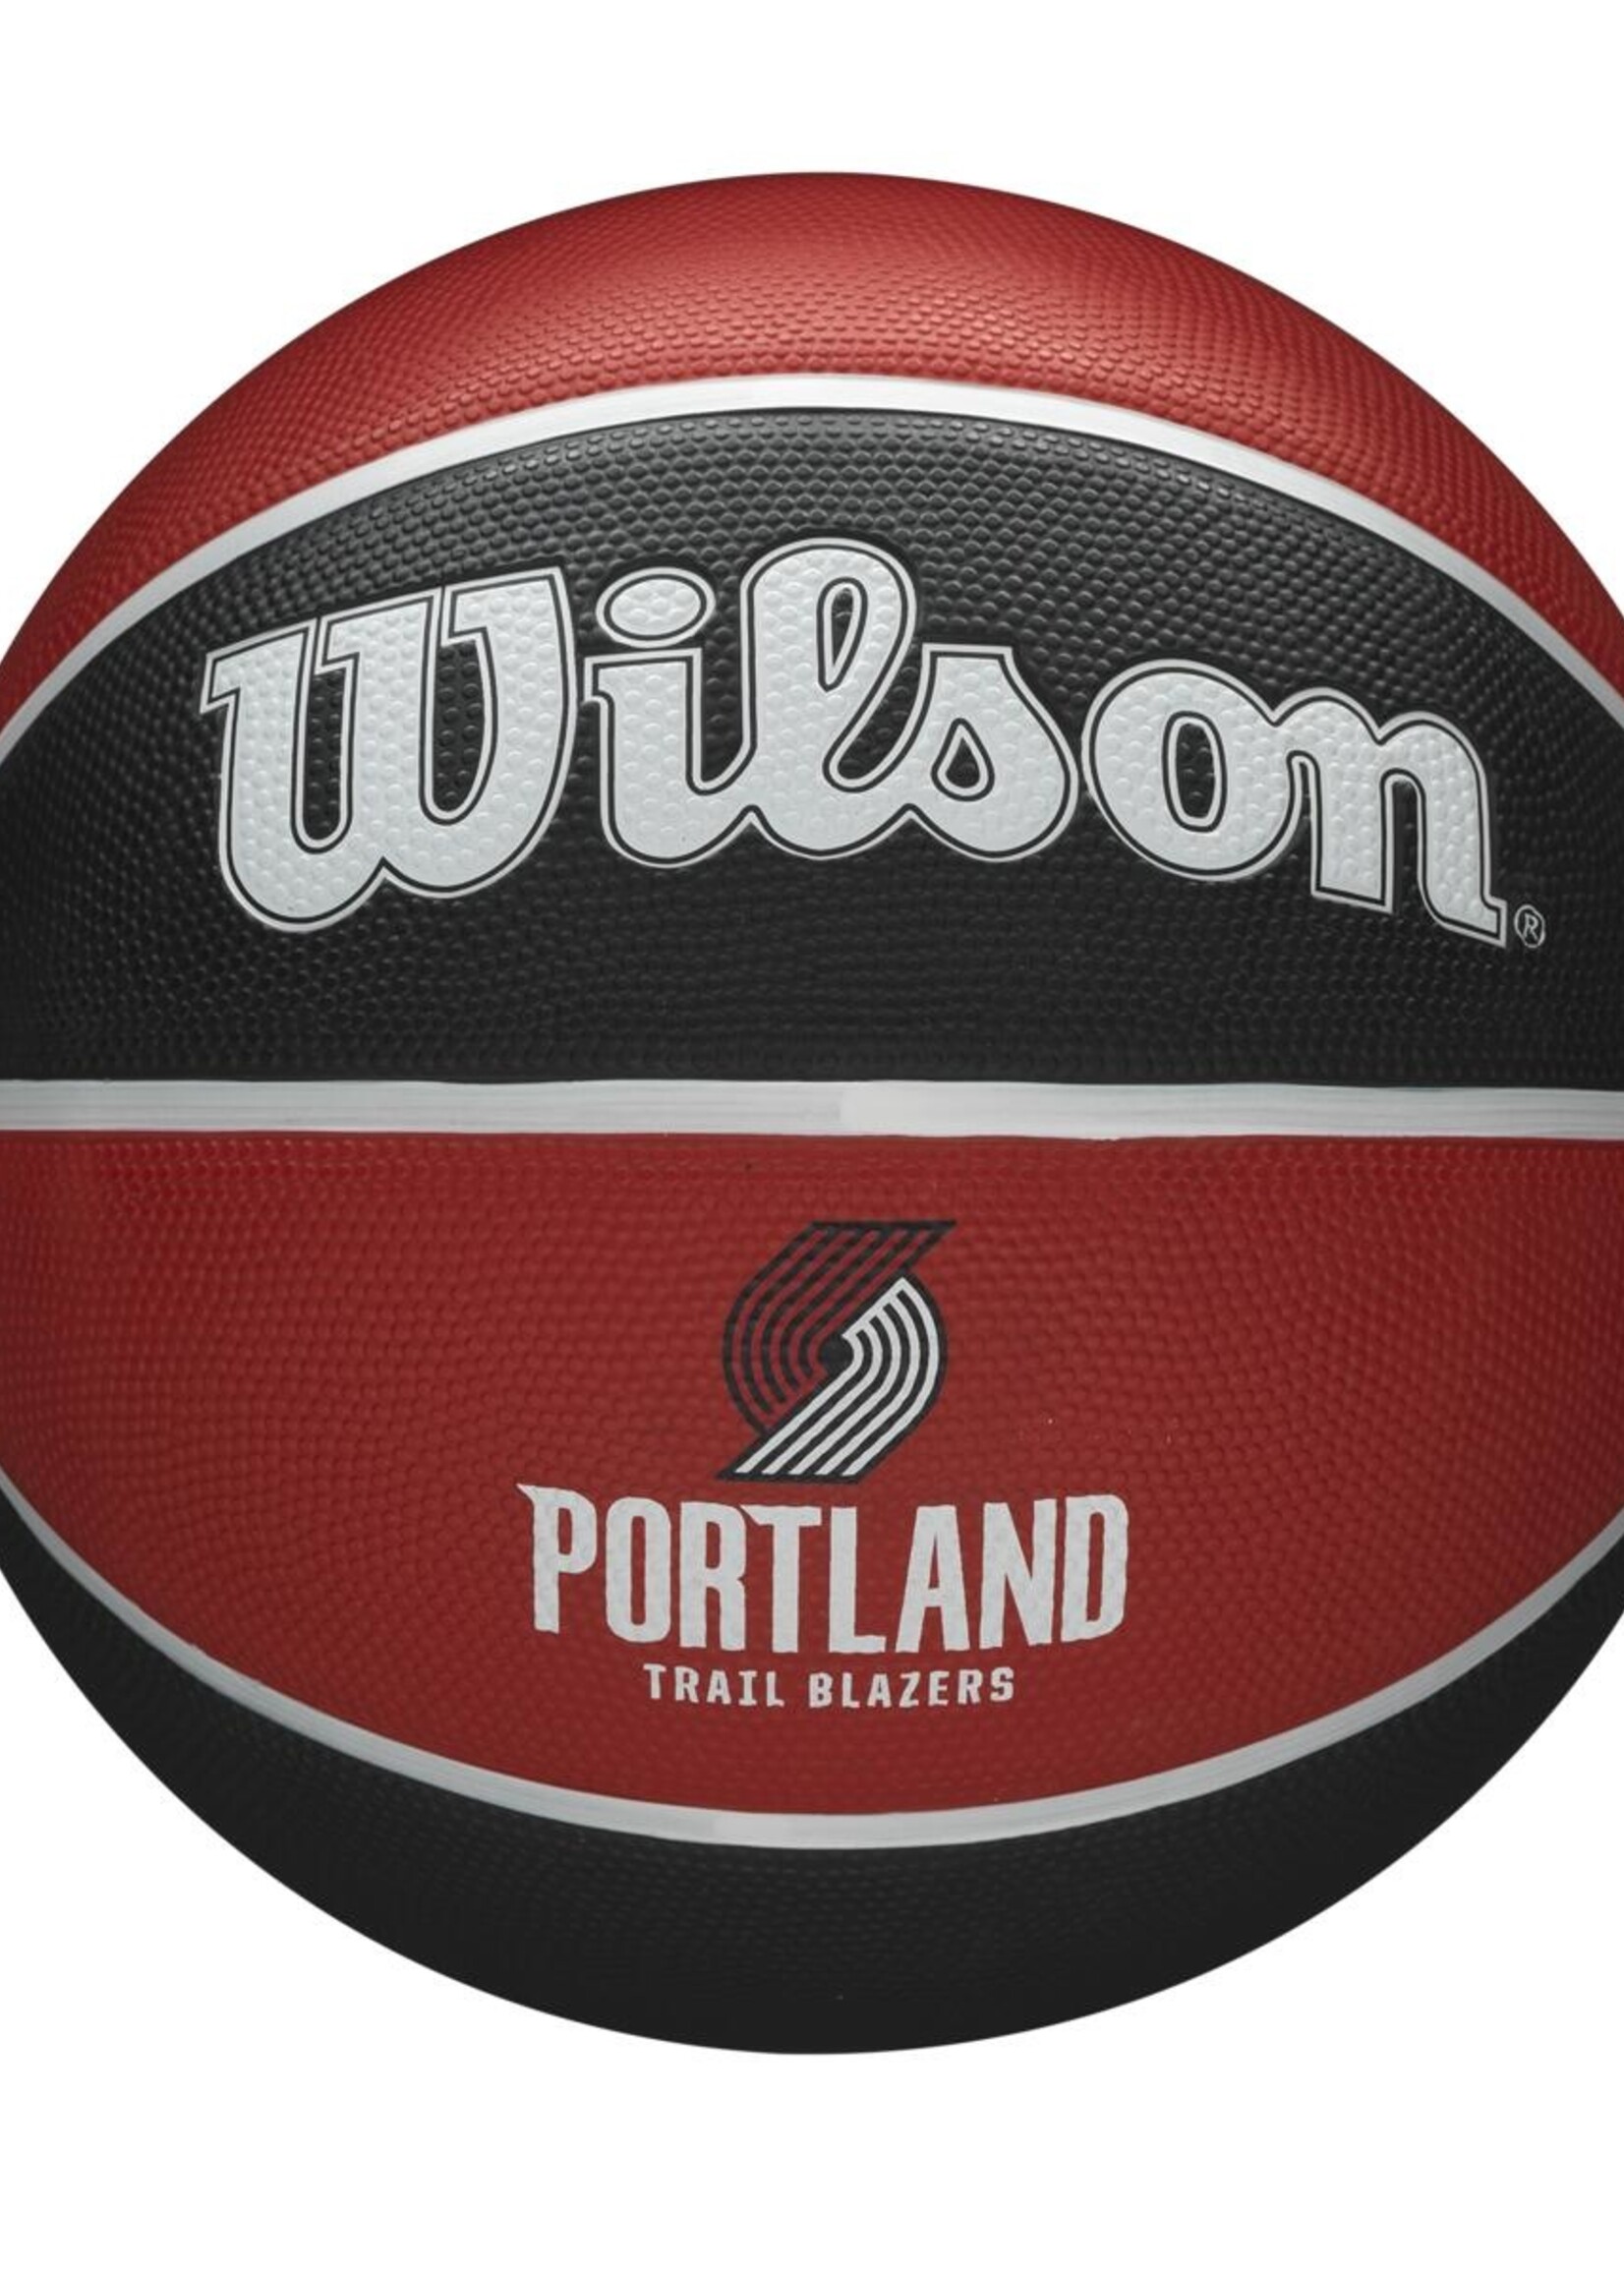 Wilson Wilson NBA PORTLAND TRAIL BLAZERS Tribute basketbal (7)